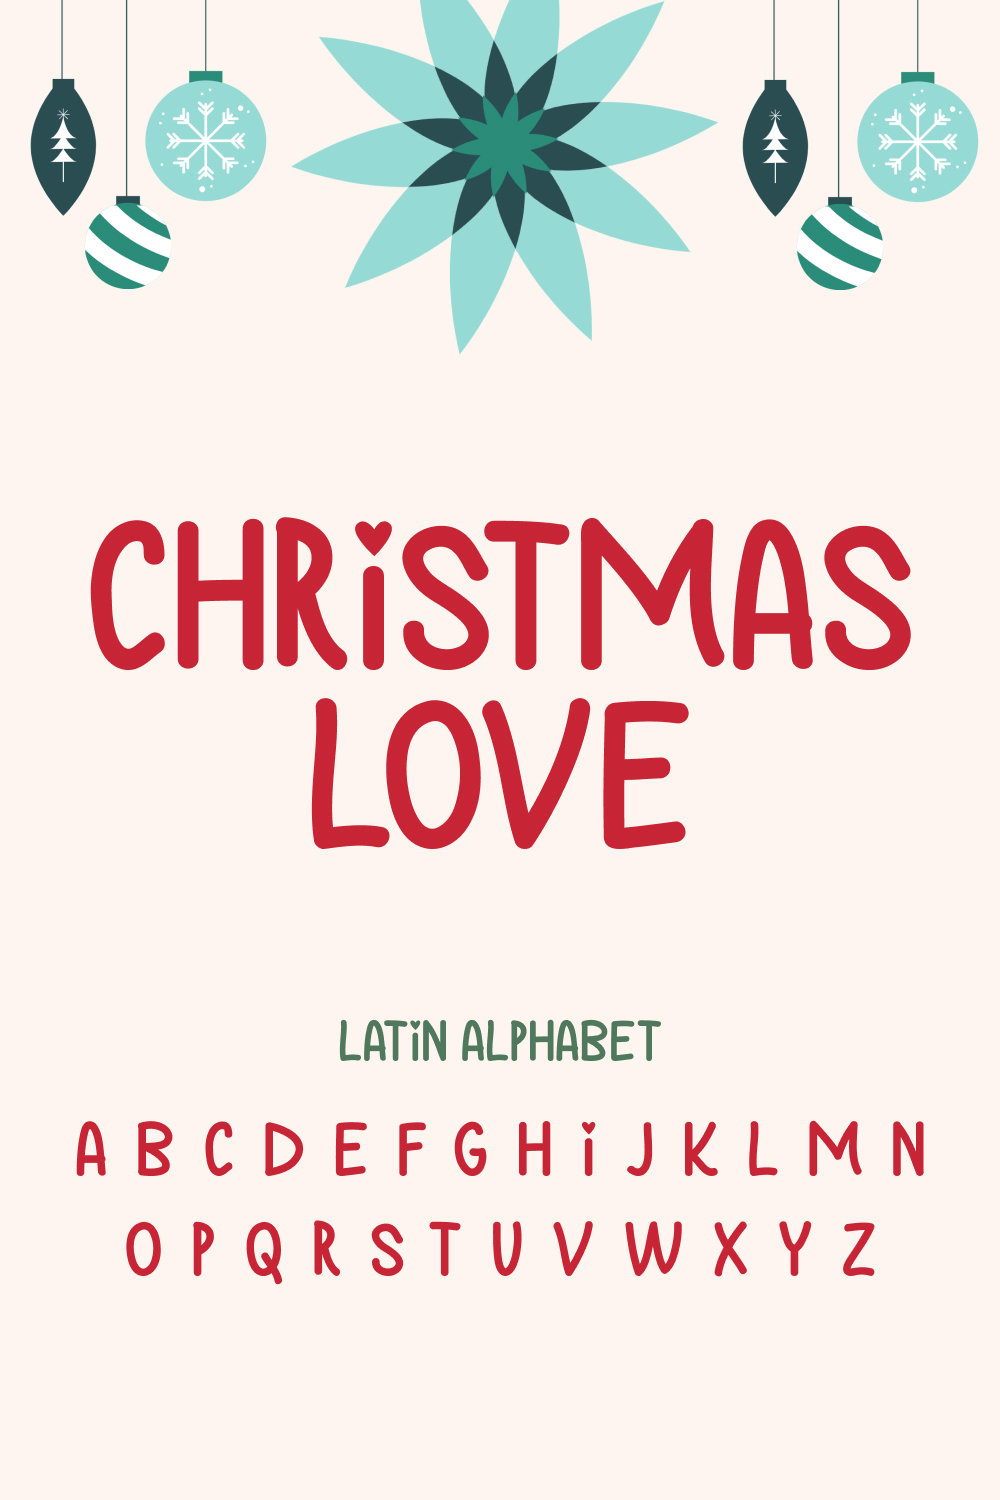 No ordinary font for Christmas topics.